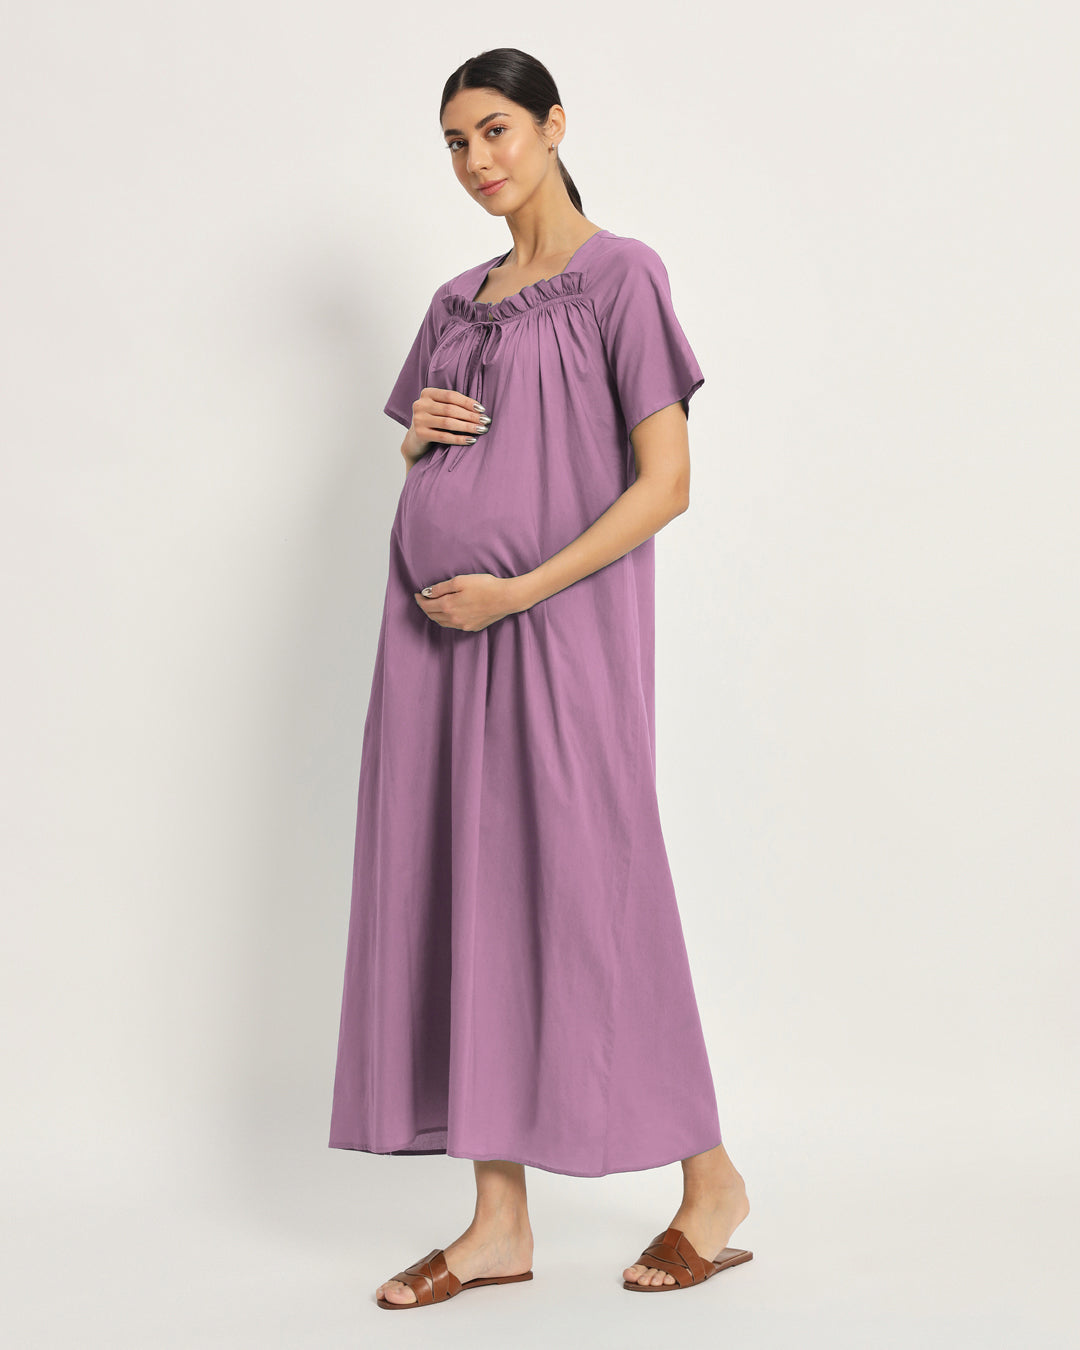 Combo: Iris Pink & Lilac Nurture N' Shine Maternity & Nursing Dress